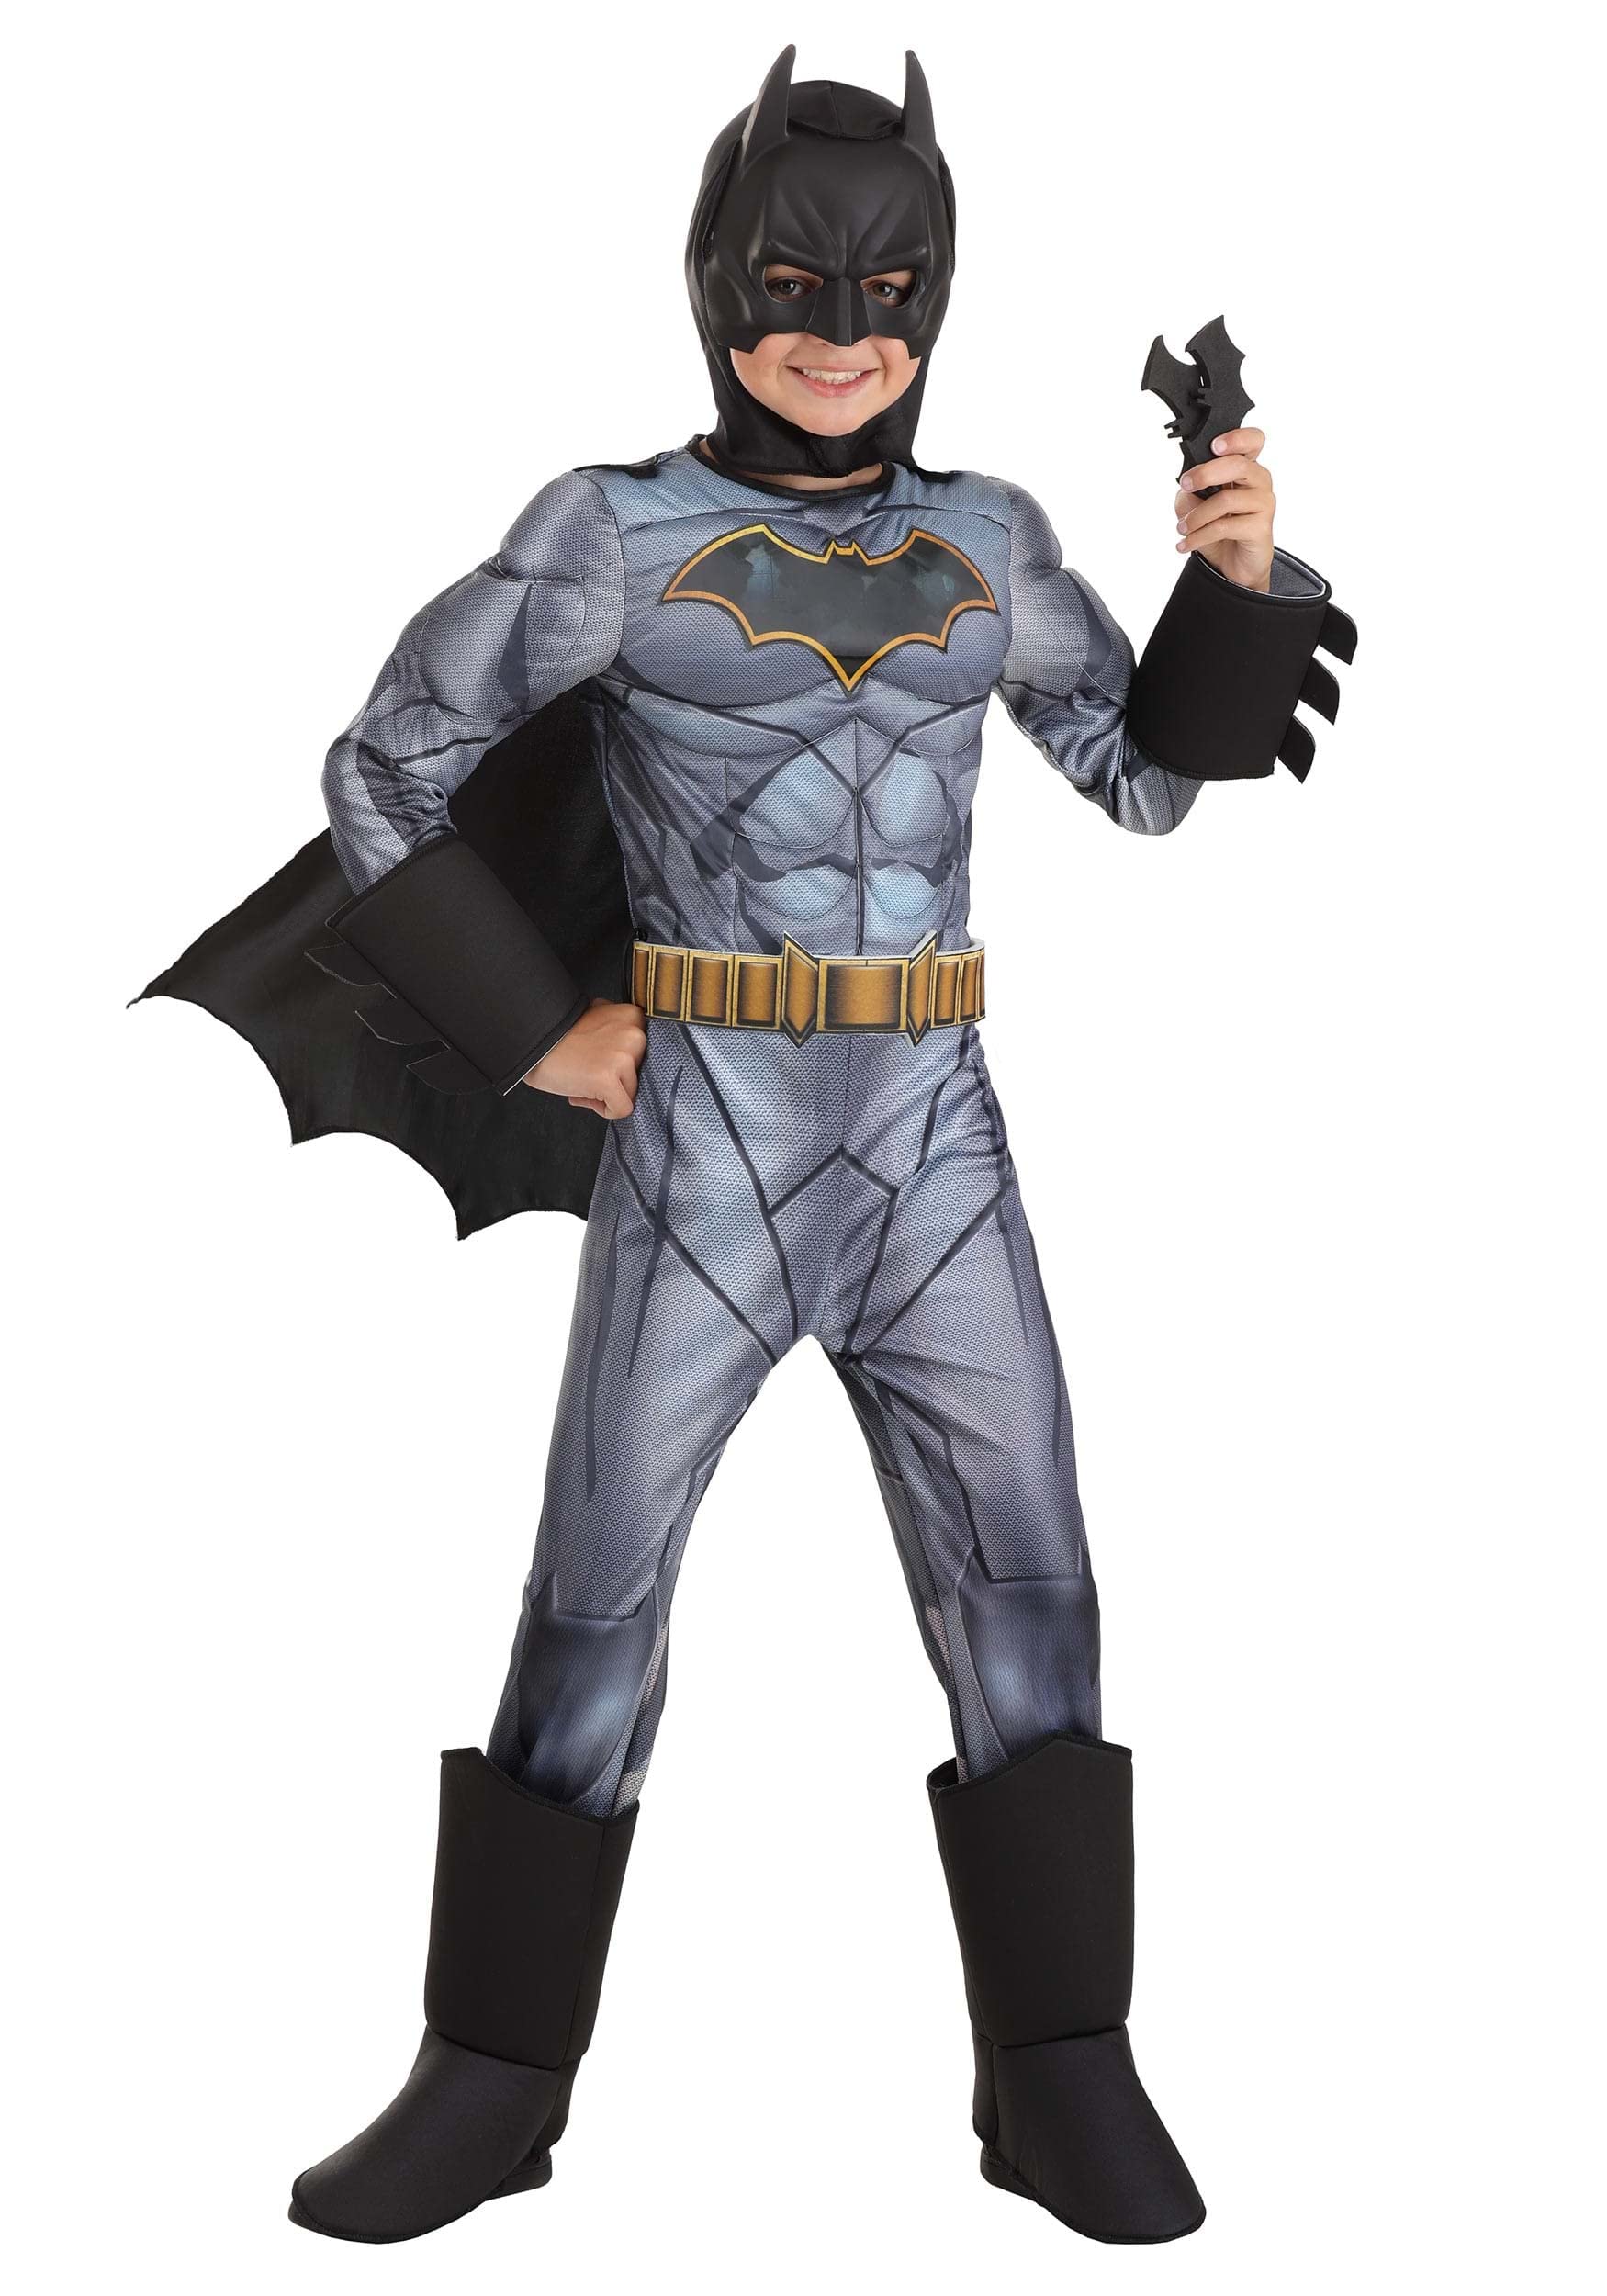 Deluxe DC Comics Batman Costume for Kids, Black Superhero Suit, Cape & Mask for Superhero Parties & Halloween